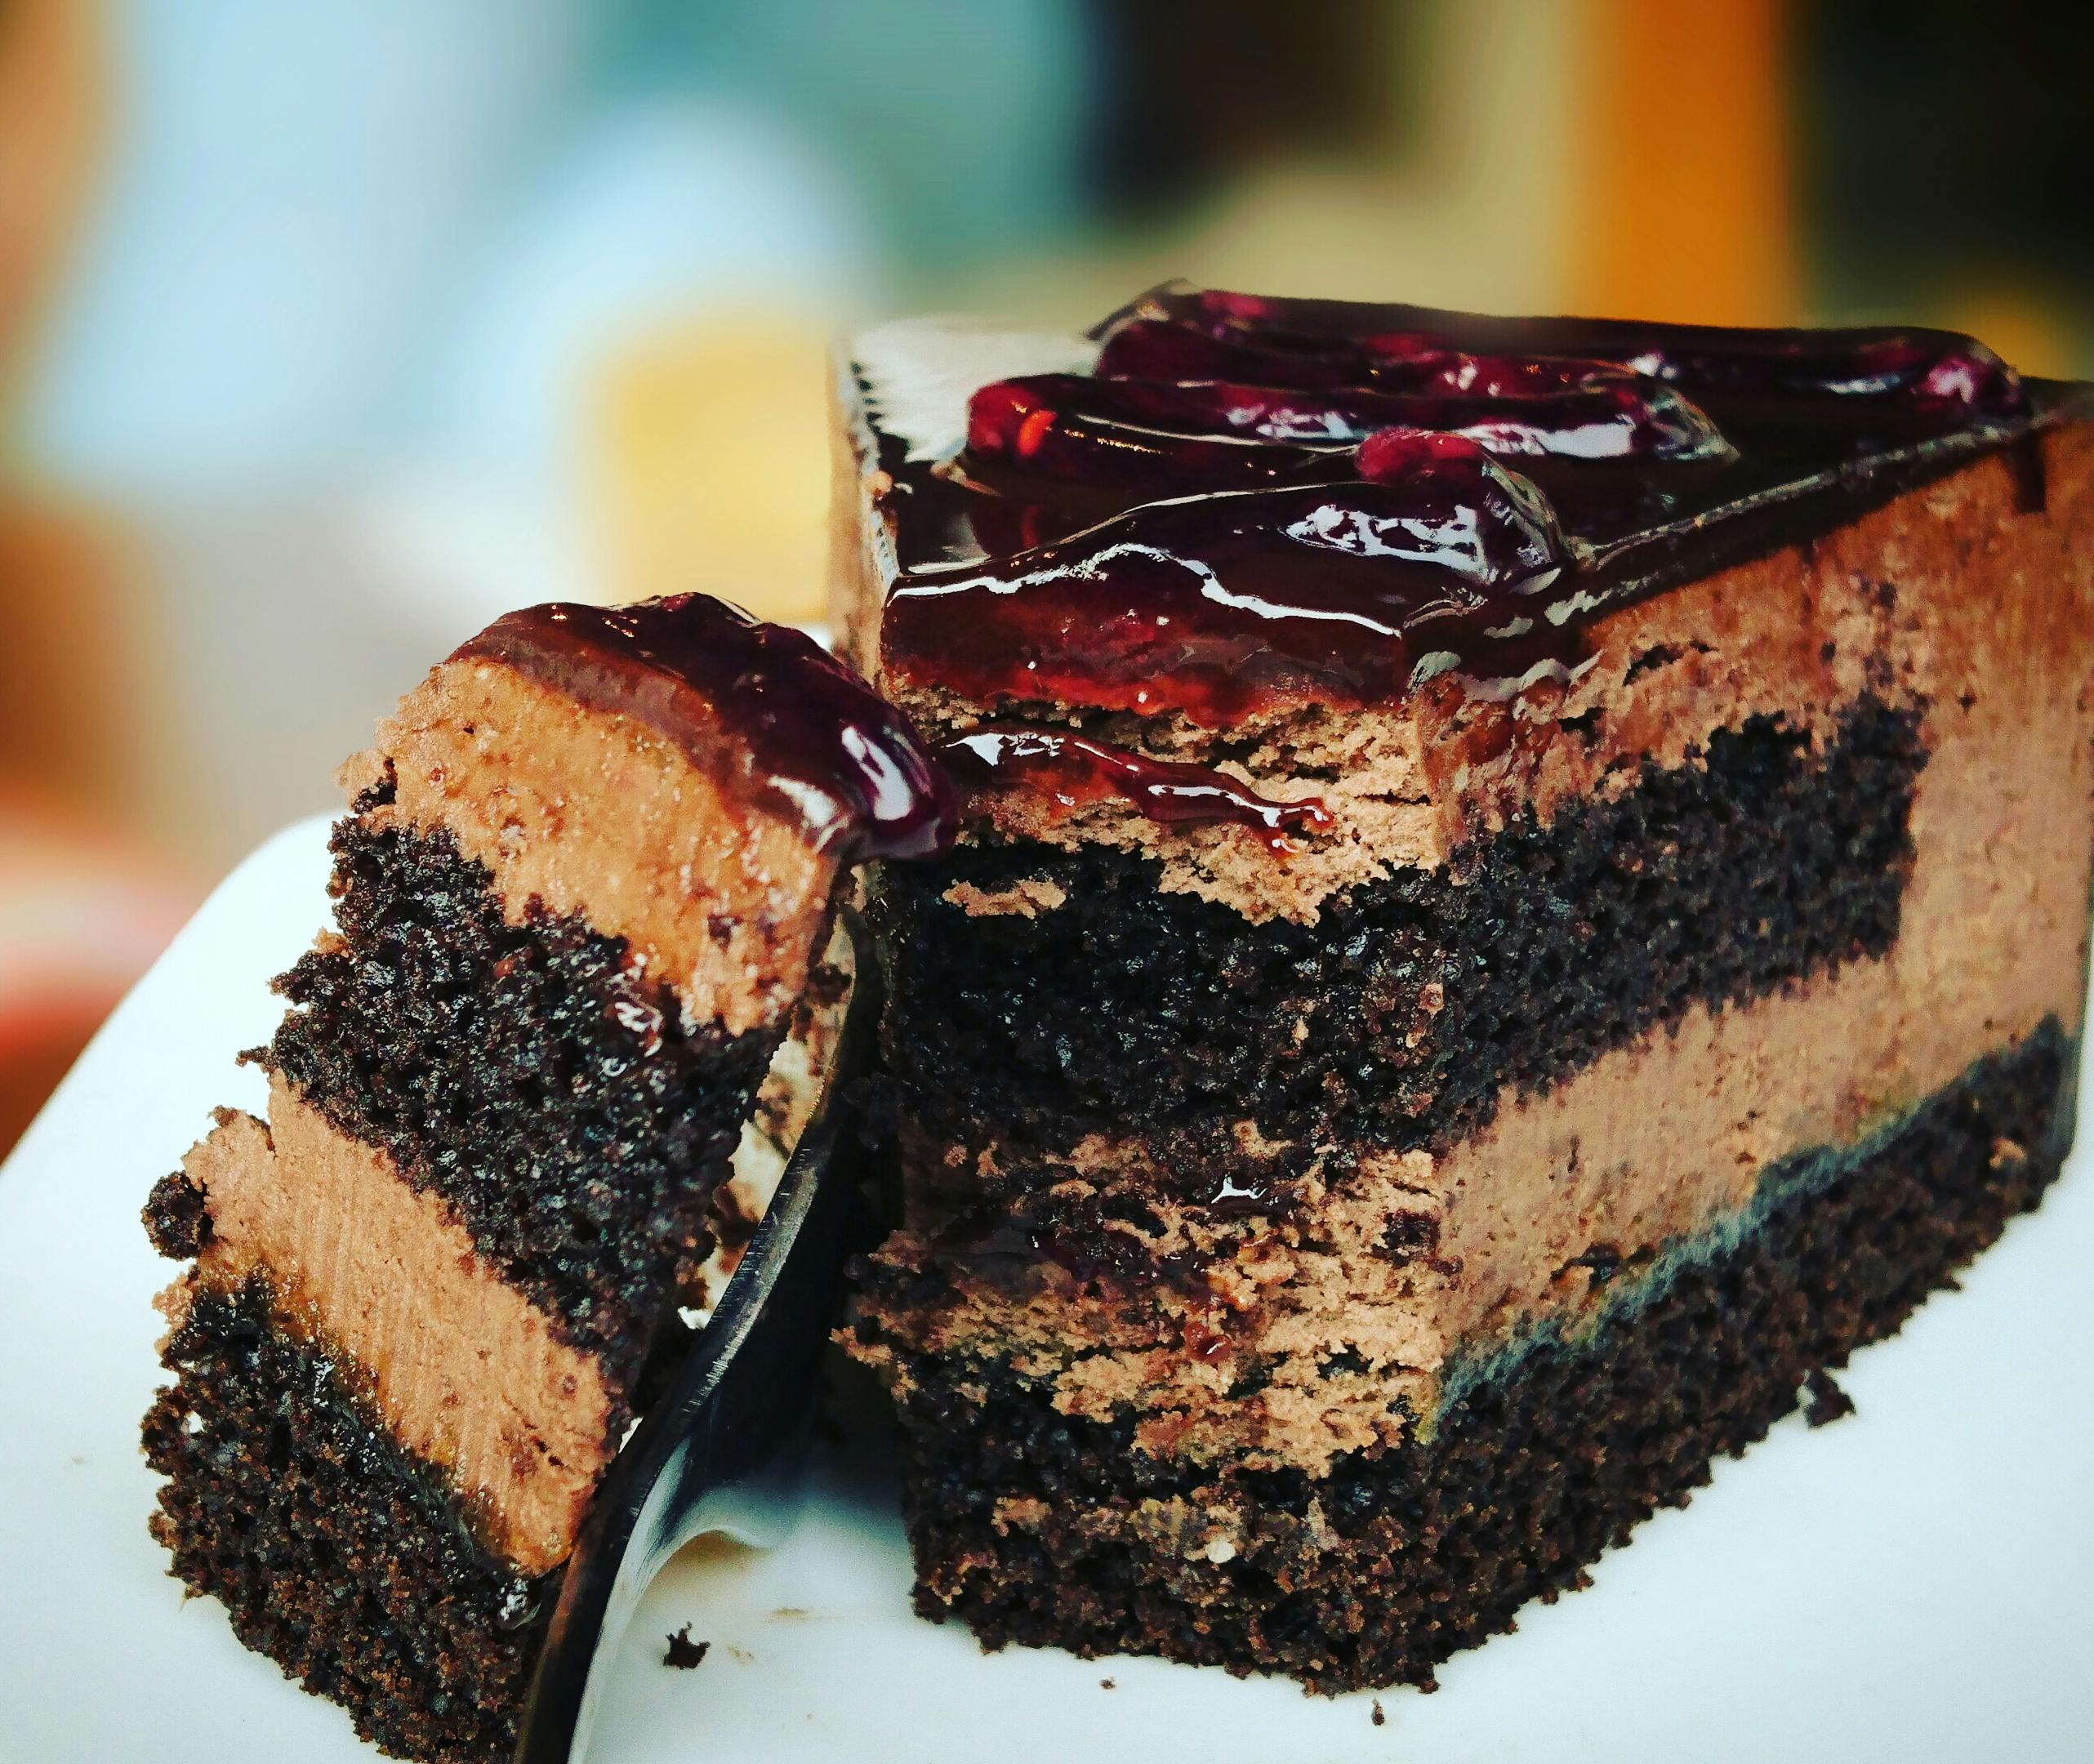 A cake | Source: Pexels